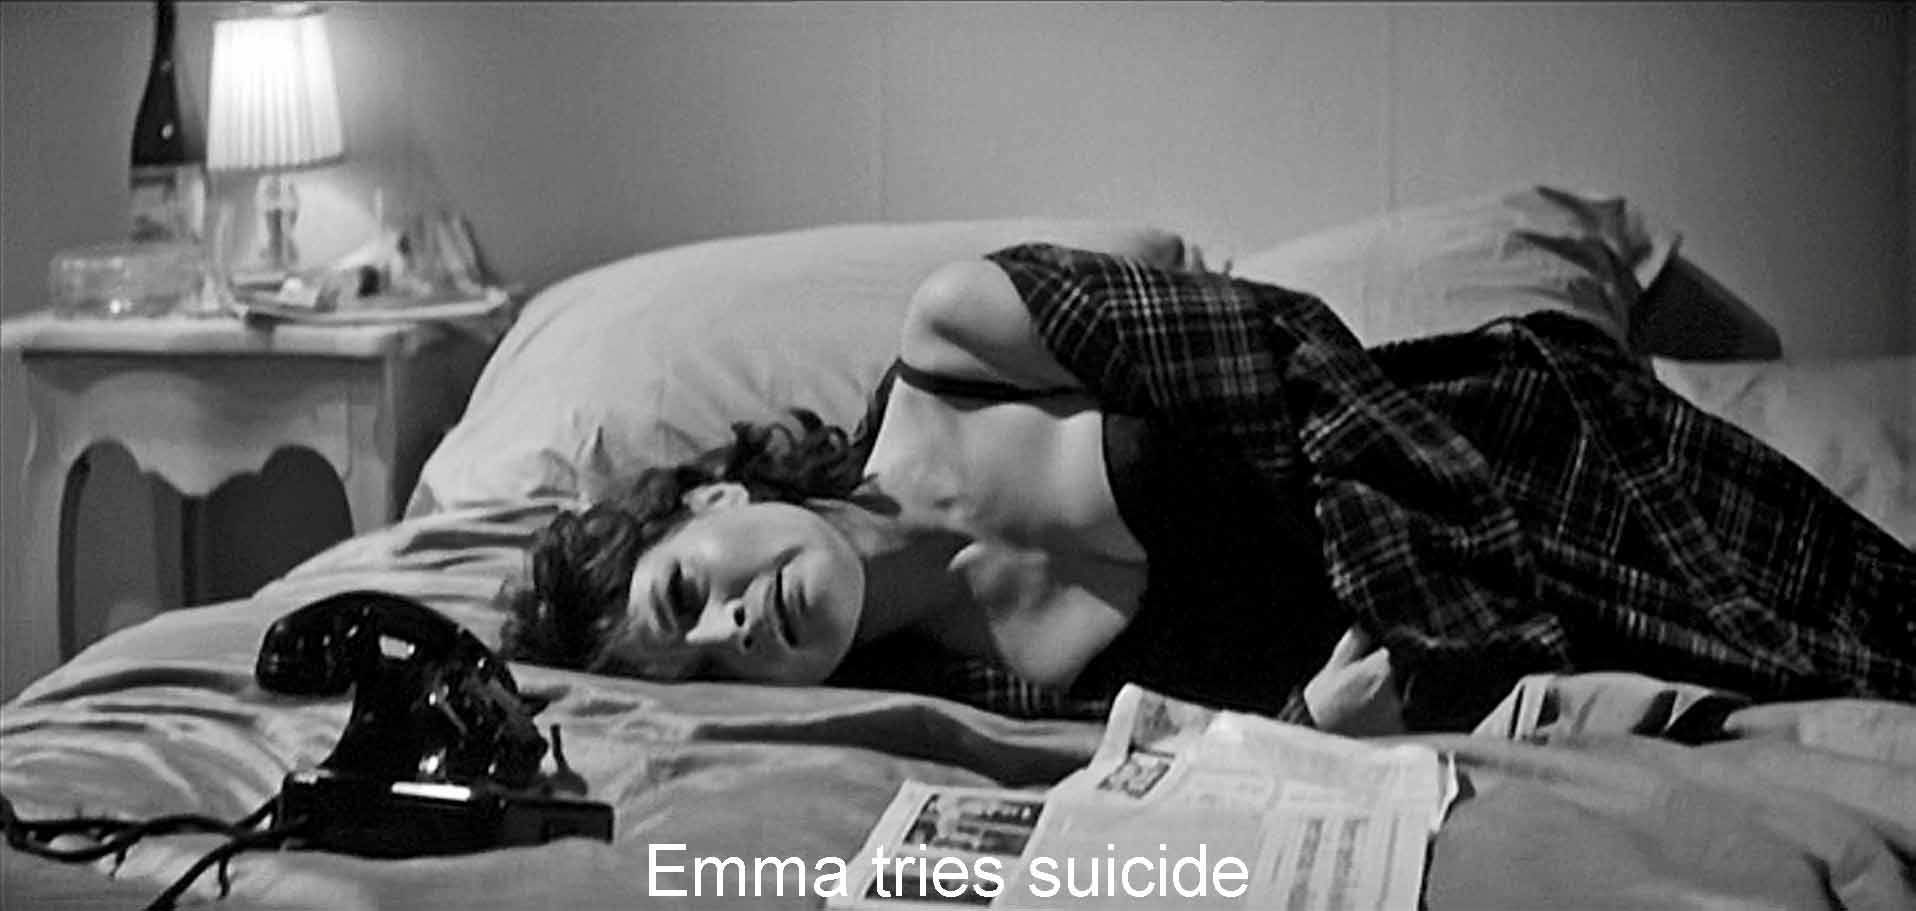 Federico Fellini's La Dolce Vita depicts the suicide of an